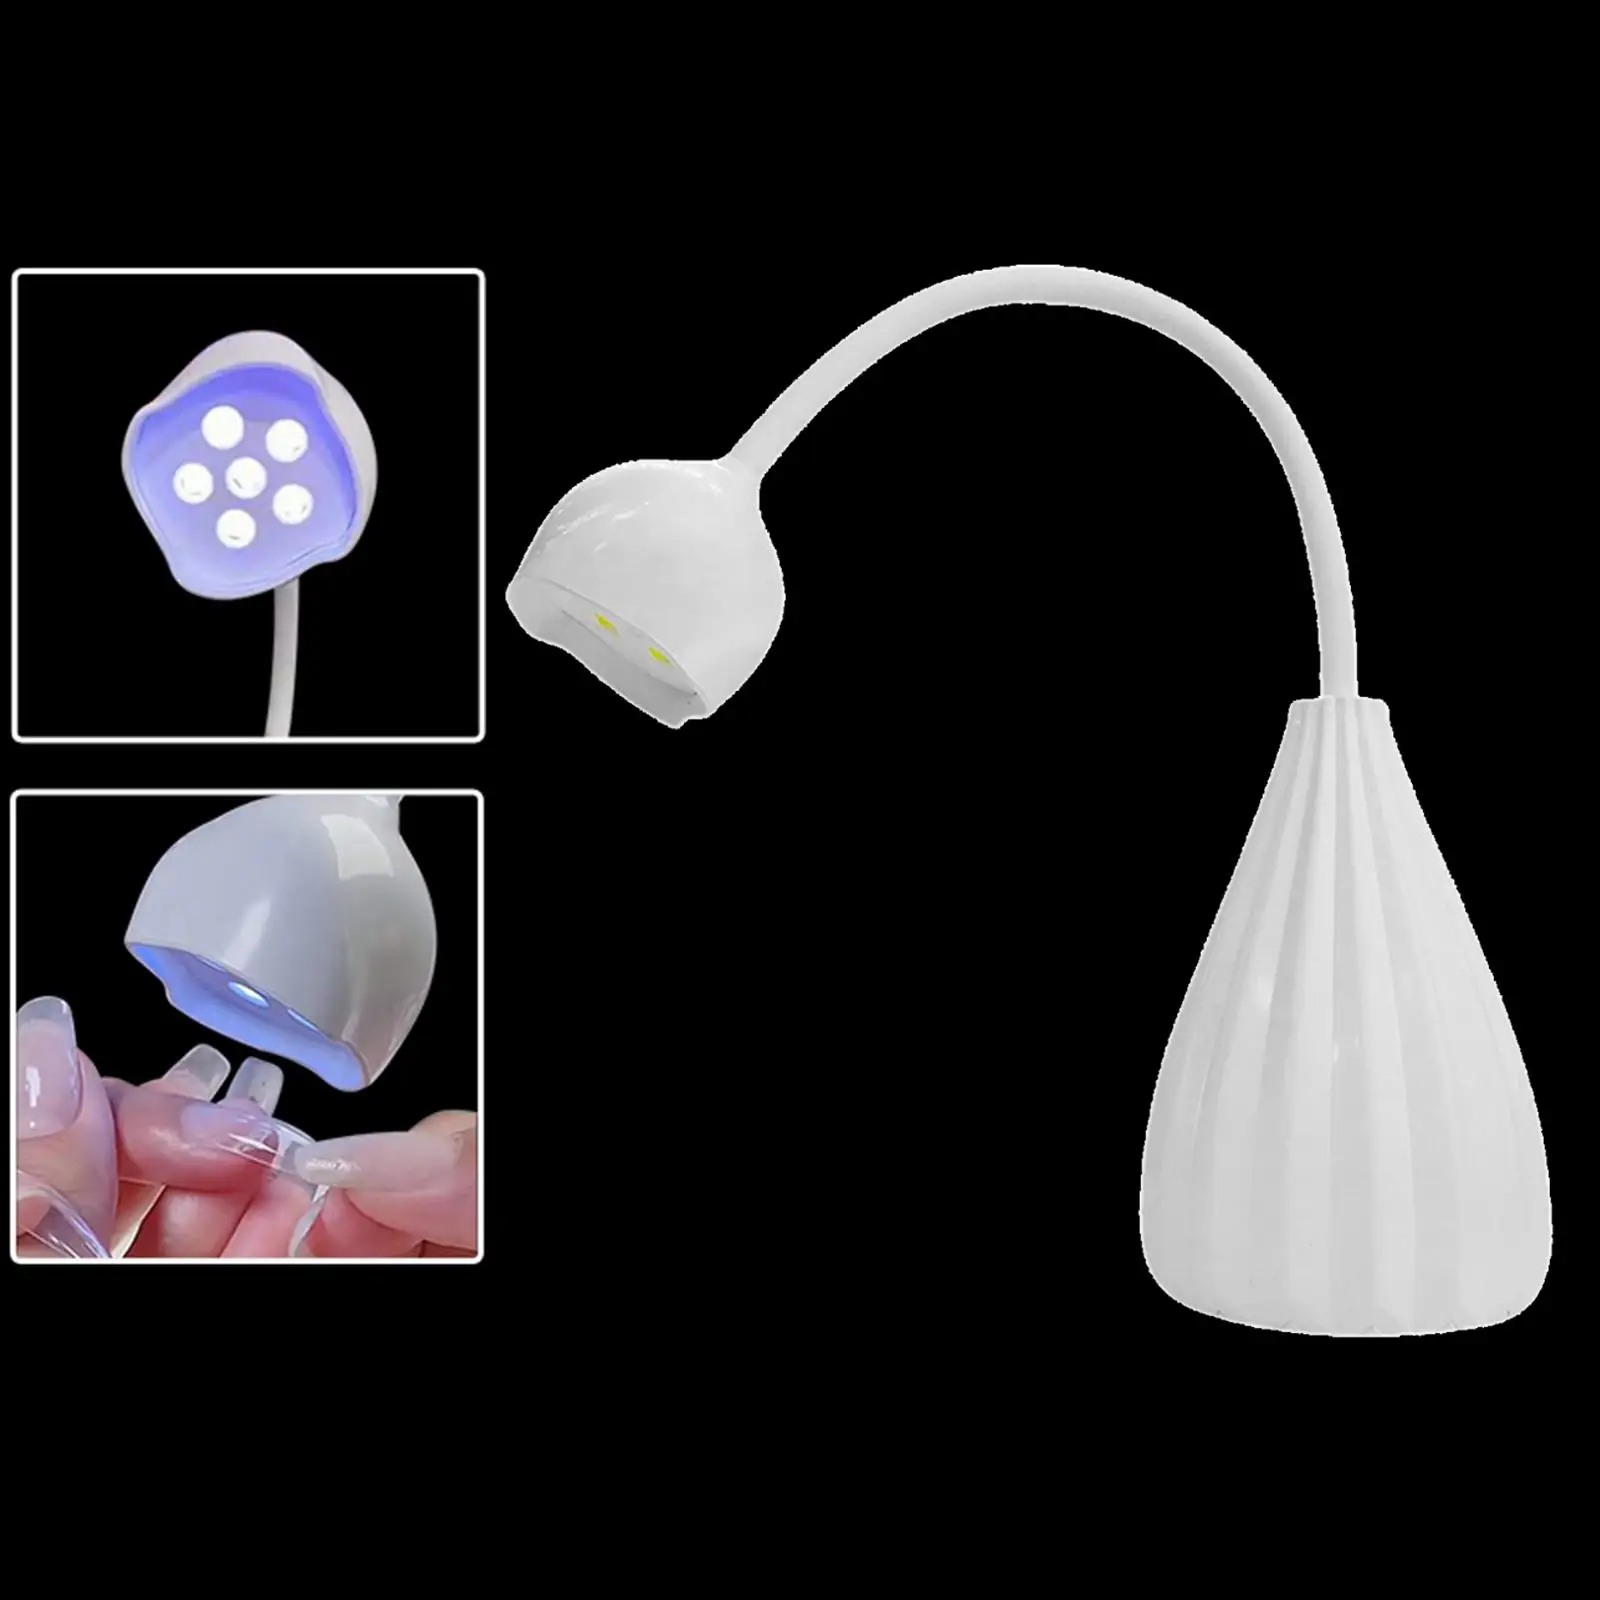 12W LED Nail Lamp Professional  Light, 6 LED, USB Charging ,Beauty Parts Tools for  Salon Girls Women 